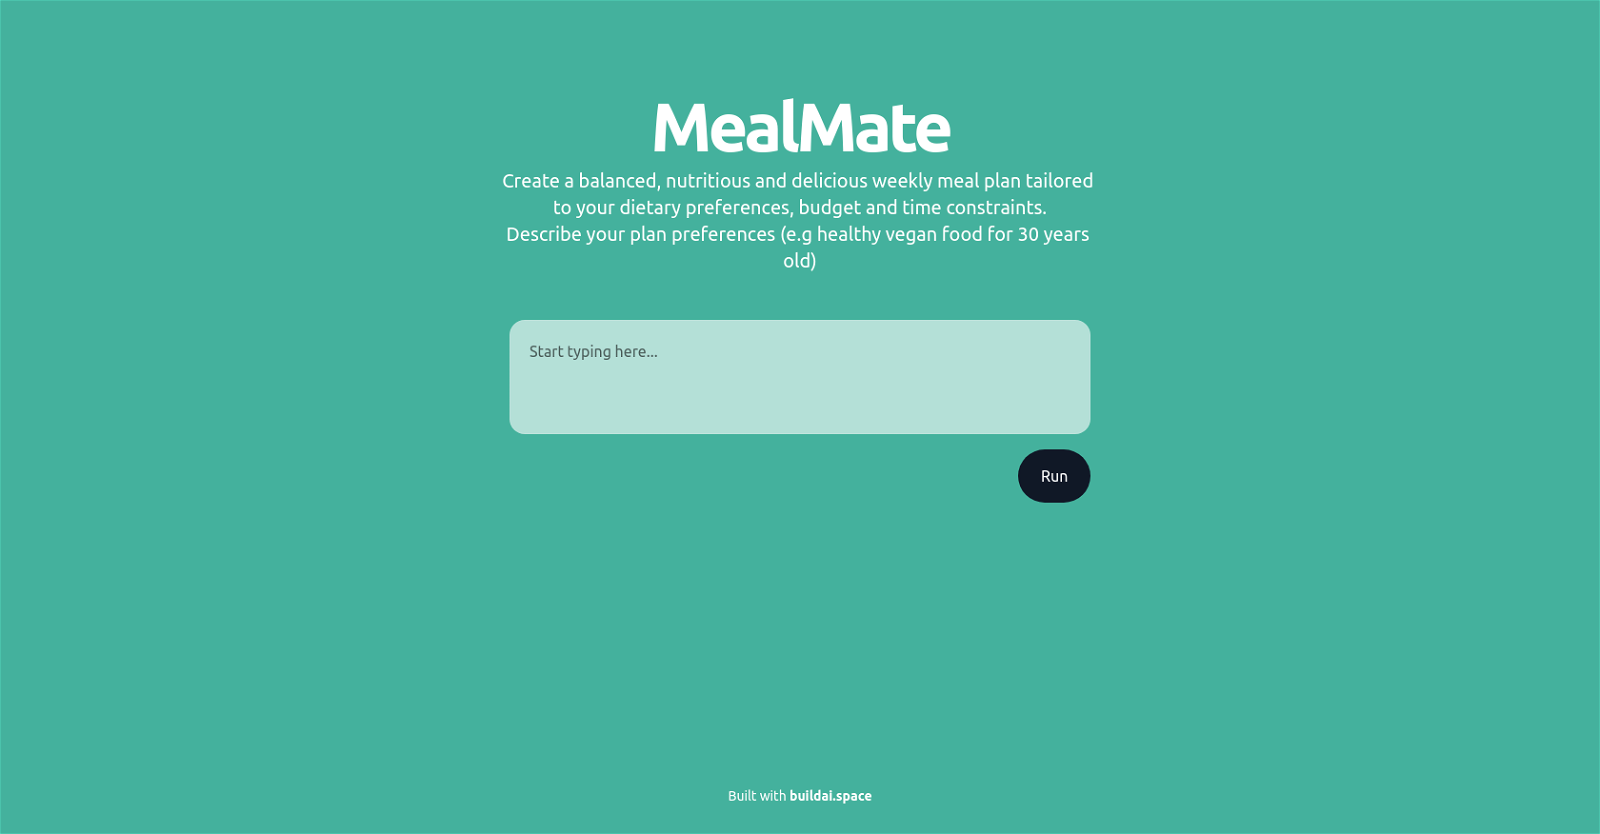 MealMate